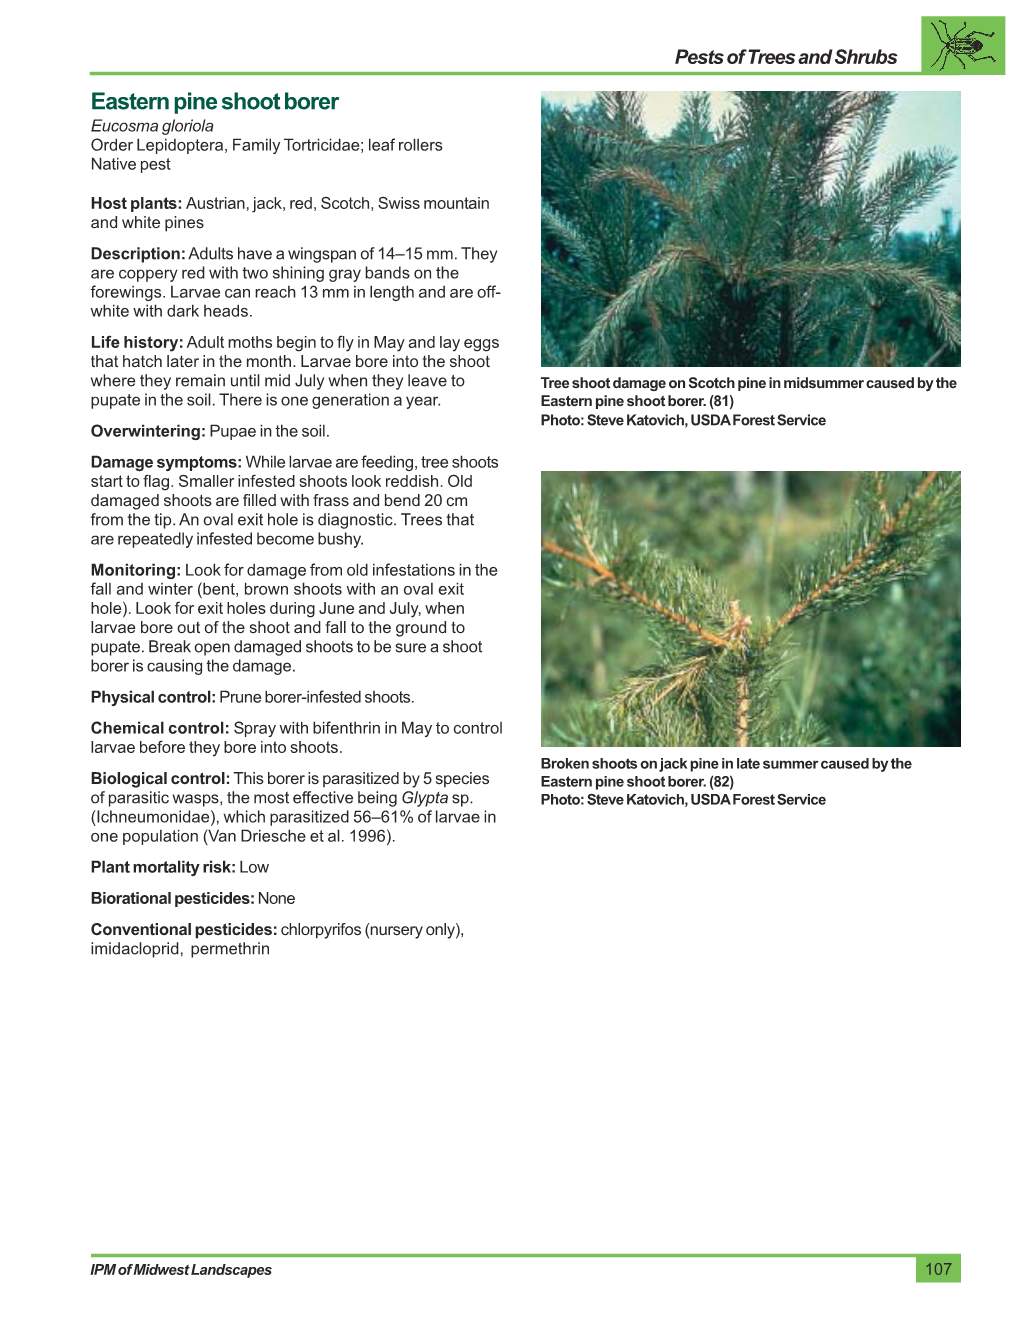 Eastern Pine Shoot Borer Eucosma Gloriola Order Lepidoptera, Family Tortricidae; Leaf Rollers Native Pest